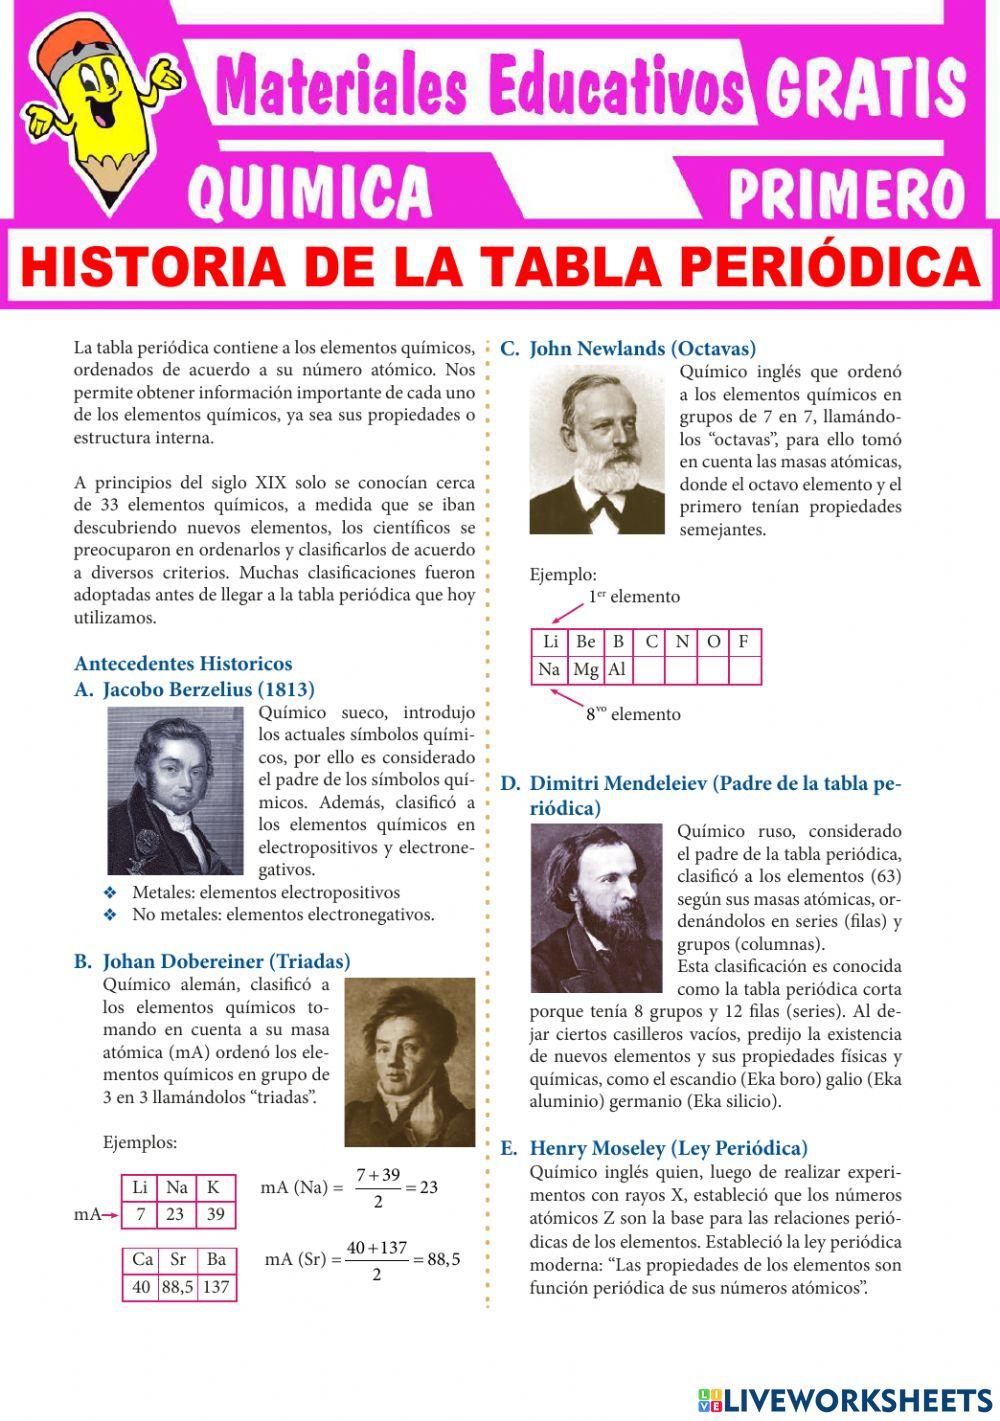 QUIZ HISTORIA DE LA TABLA PERIÓDICA online exercise for